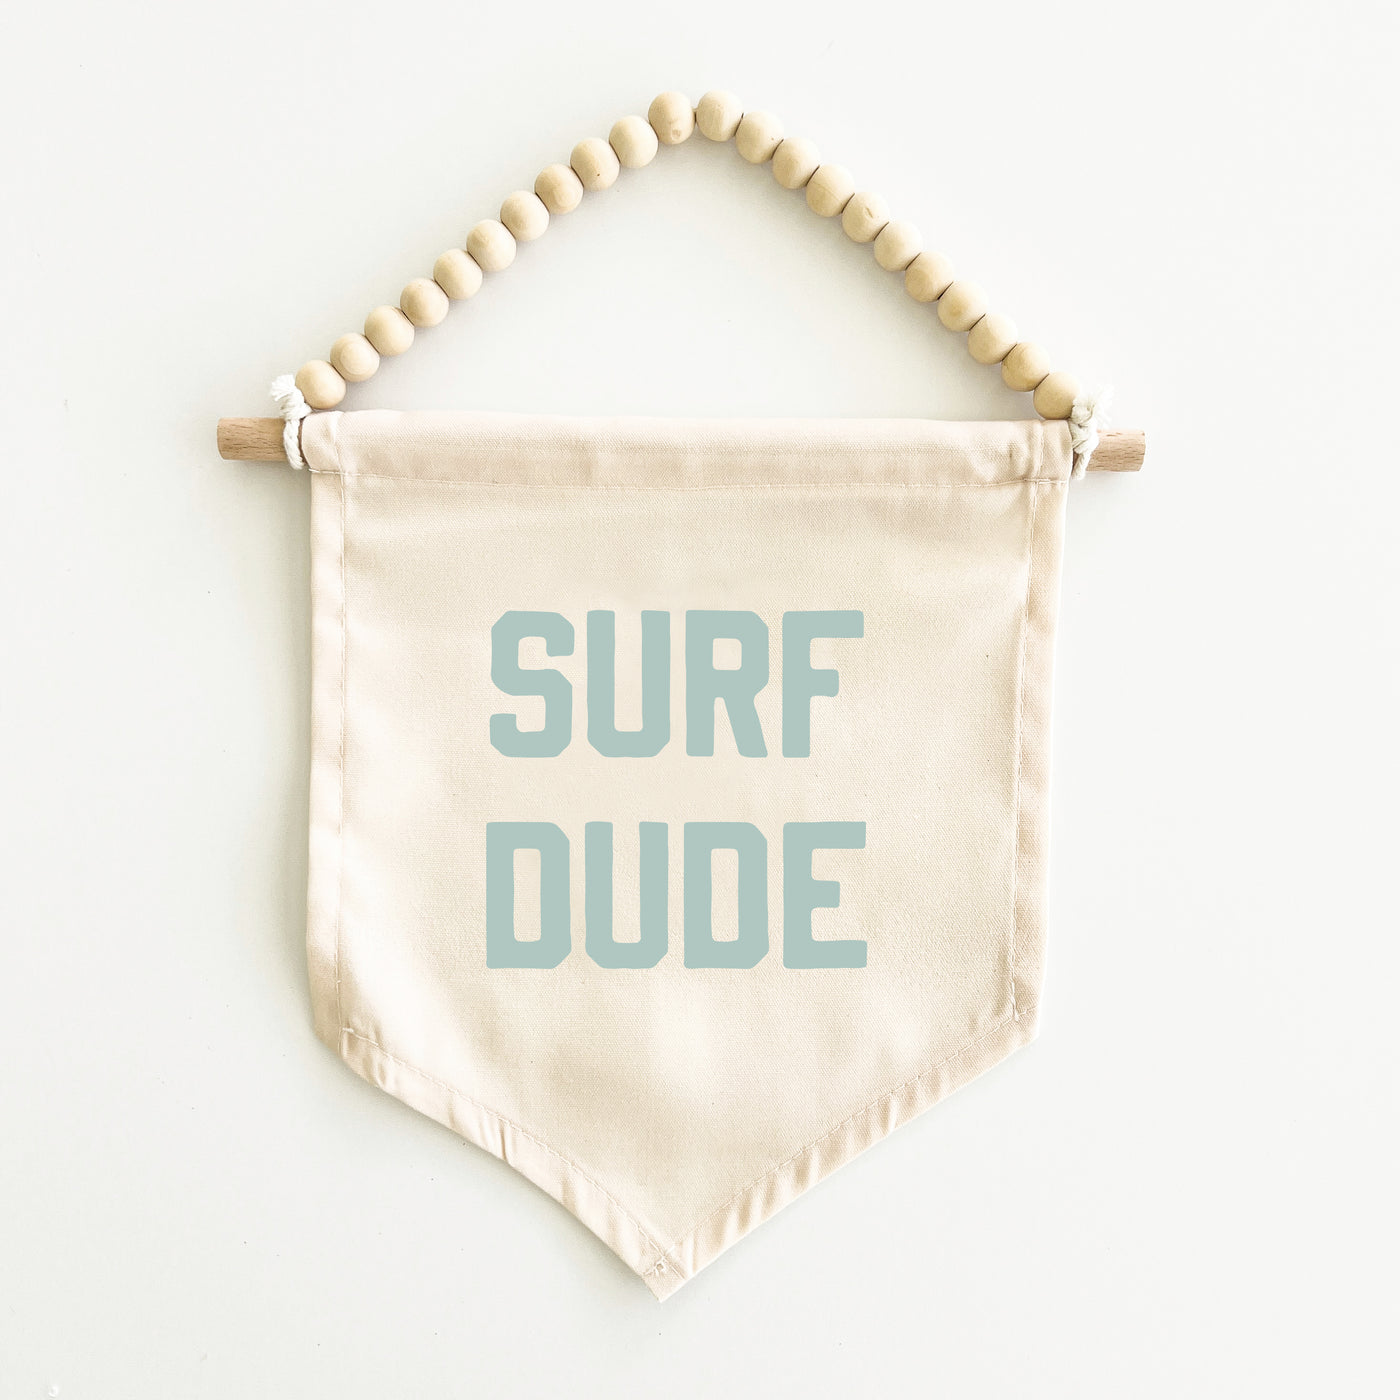 Surf Dude Hang Sign